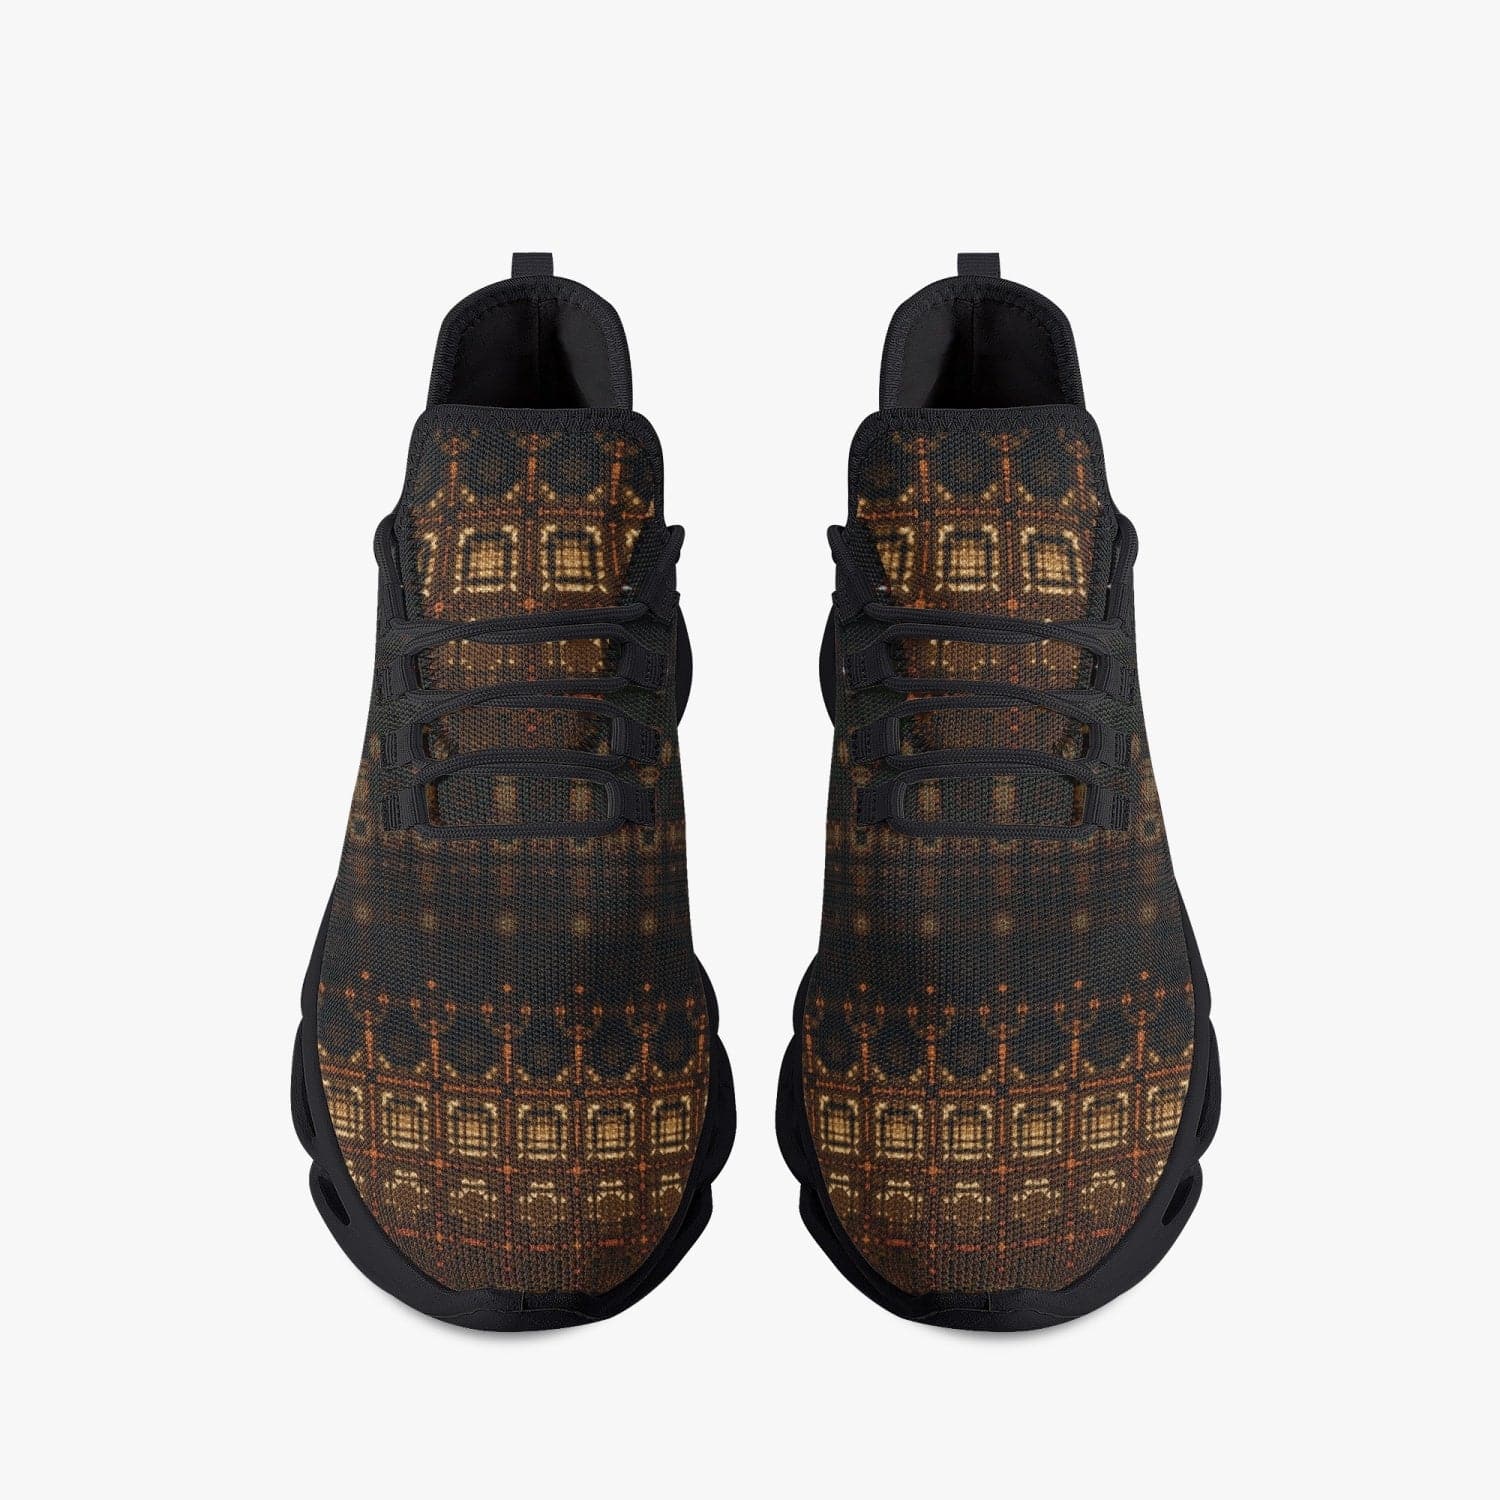 Dark brown red and orange pattern Exclusive 2022 Bounce Mesh Knit Sneakers - Black, by Sensus Studio Design